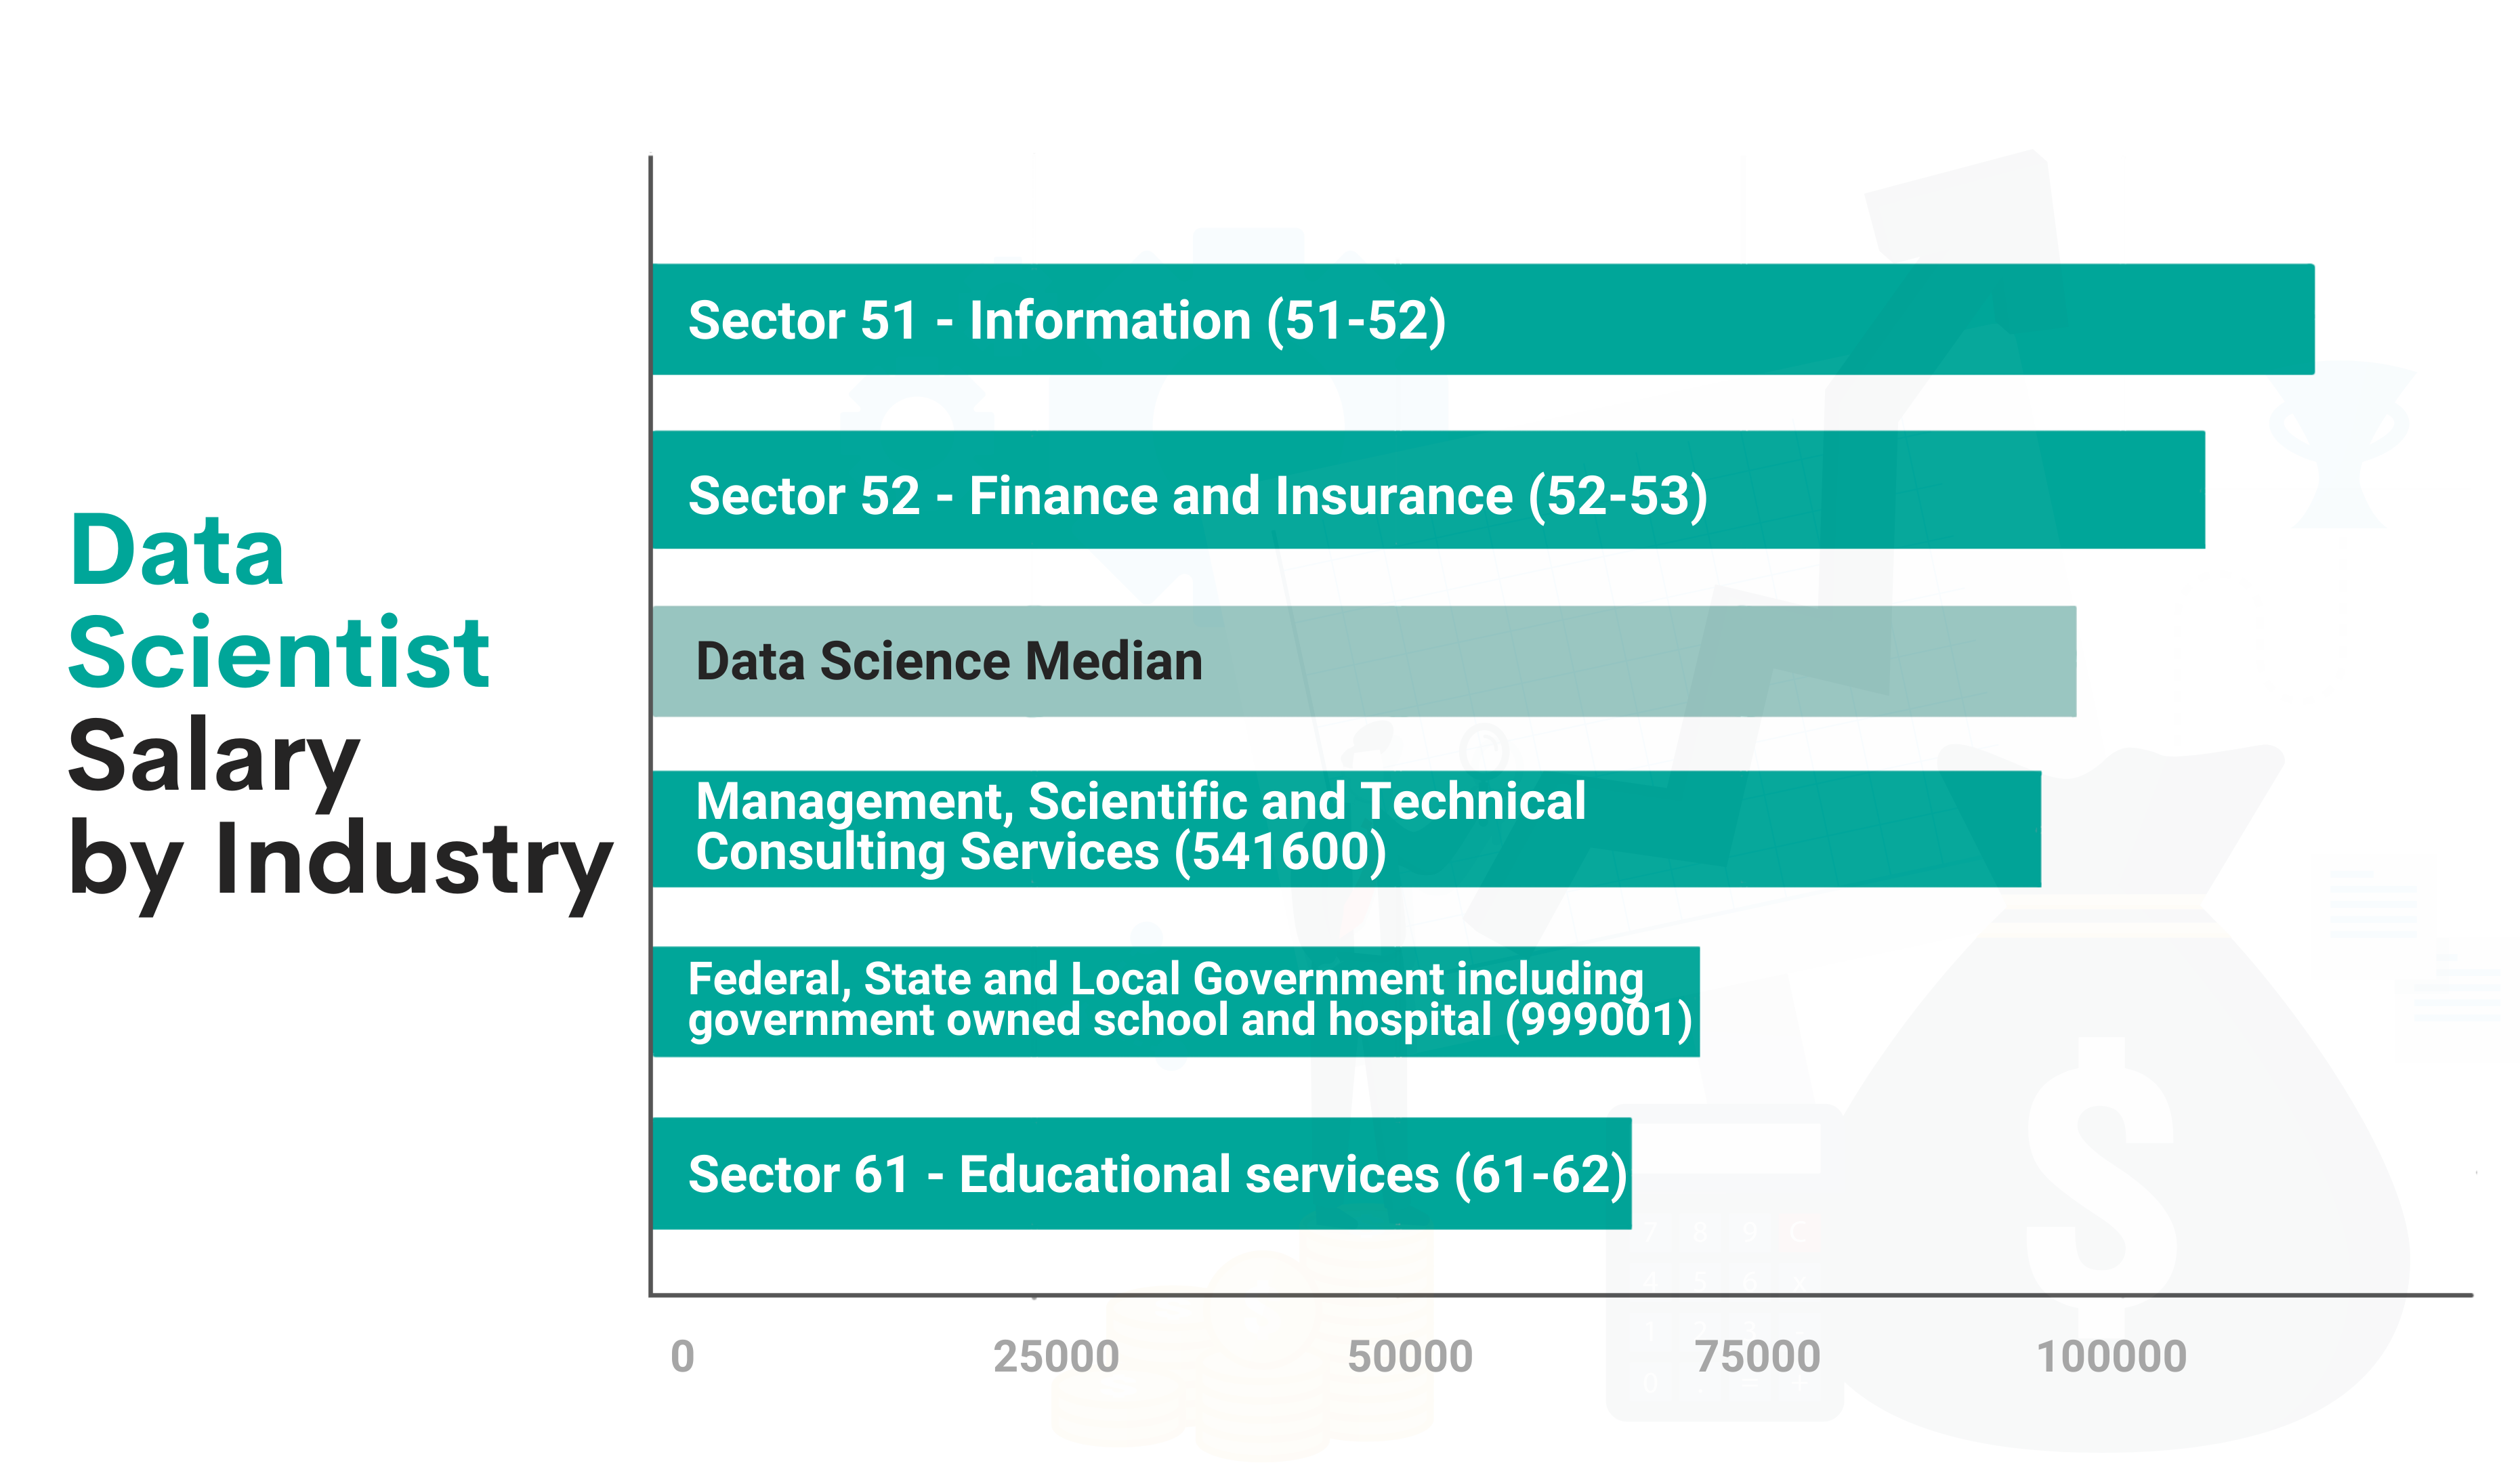 Data Scientist Salaries based on Industry